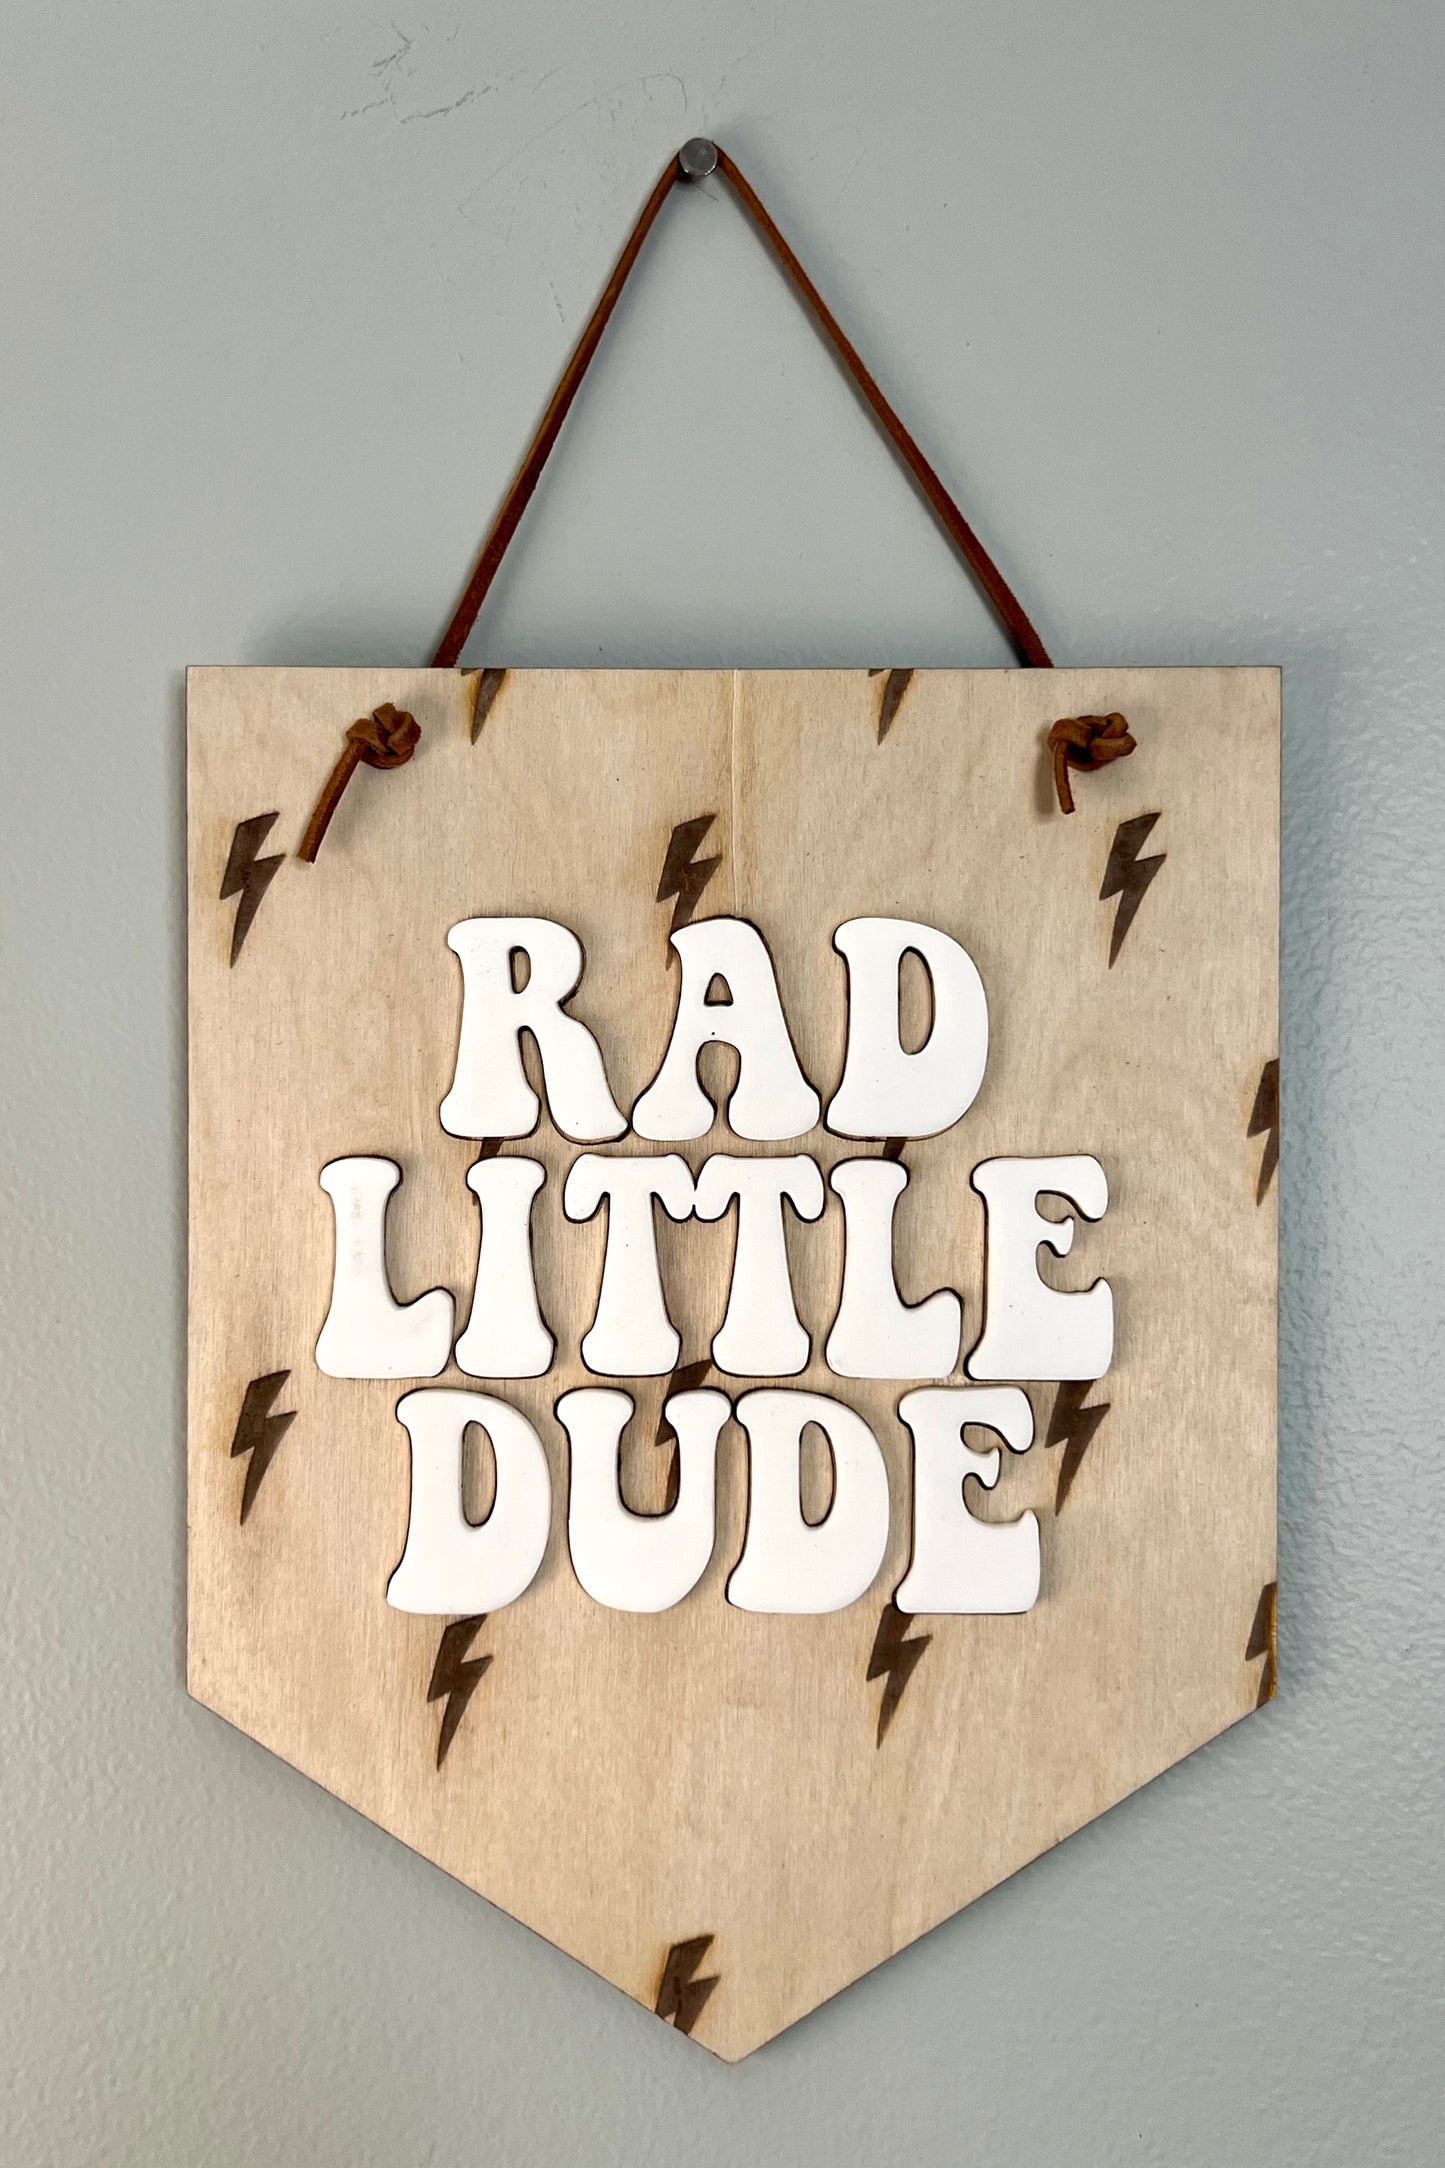 Rad Little Dude Sign